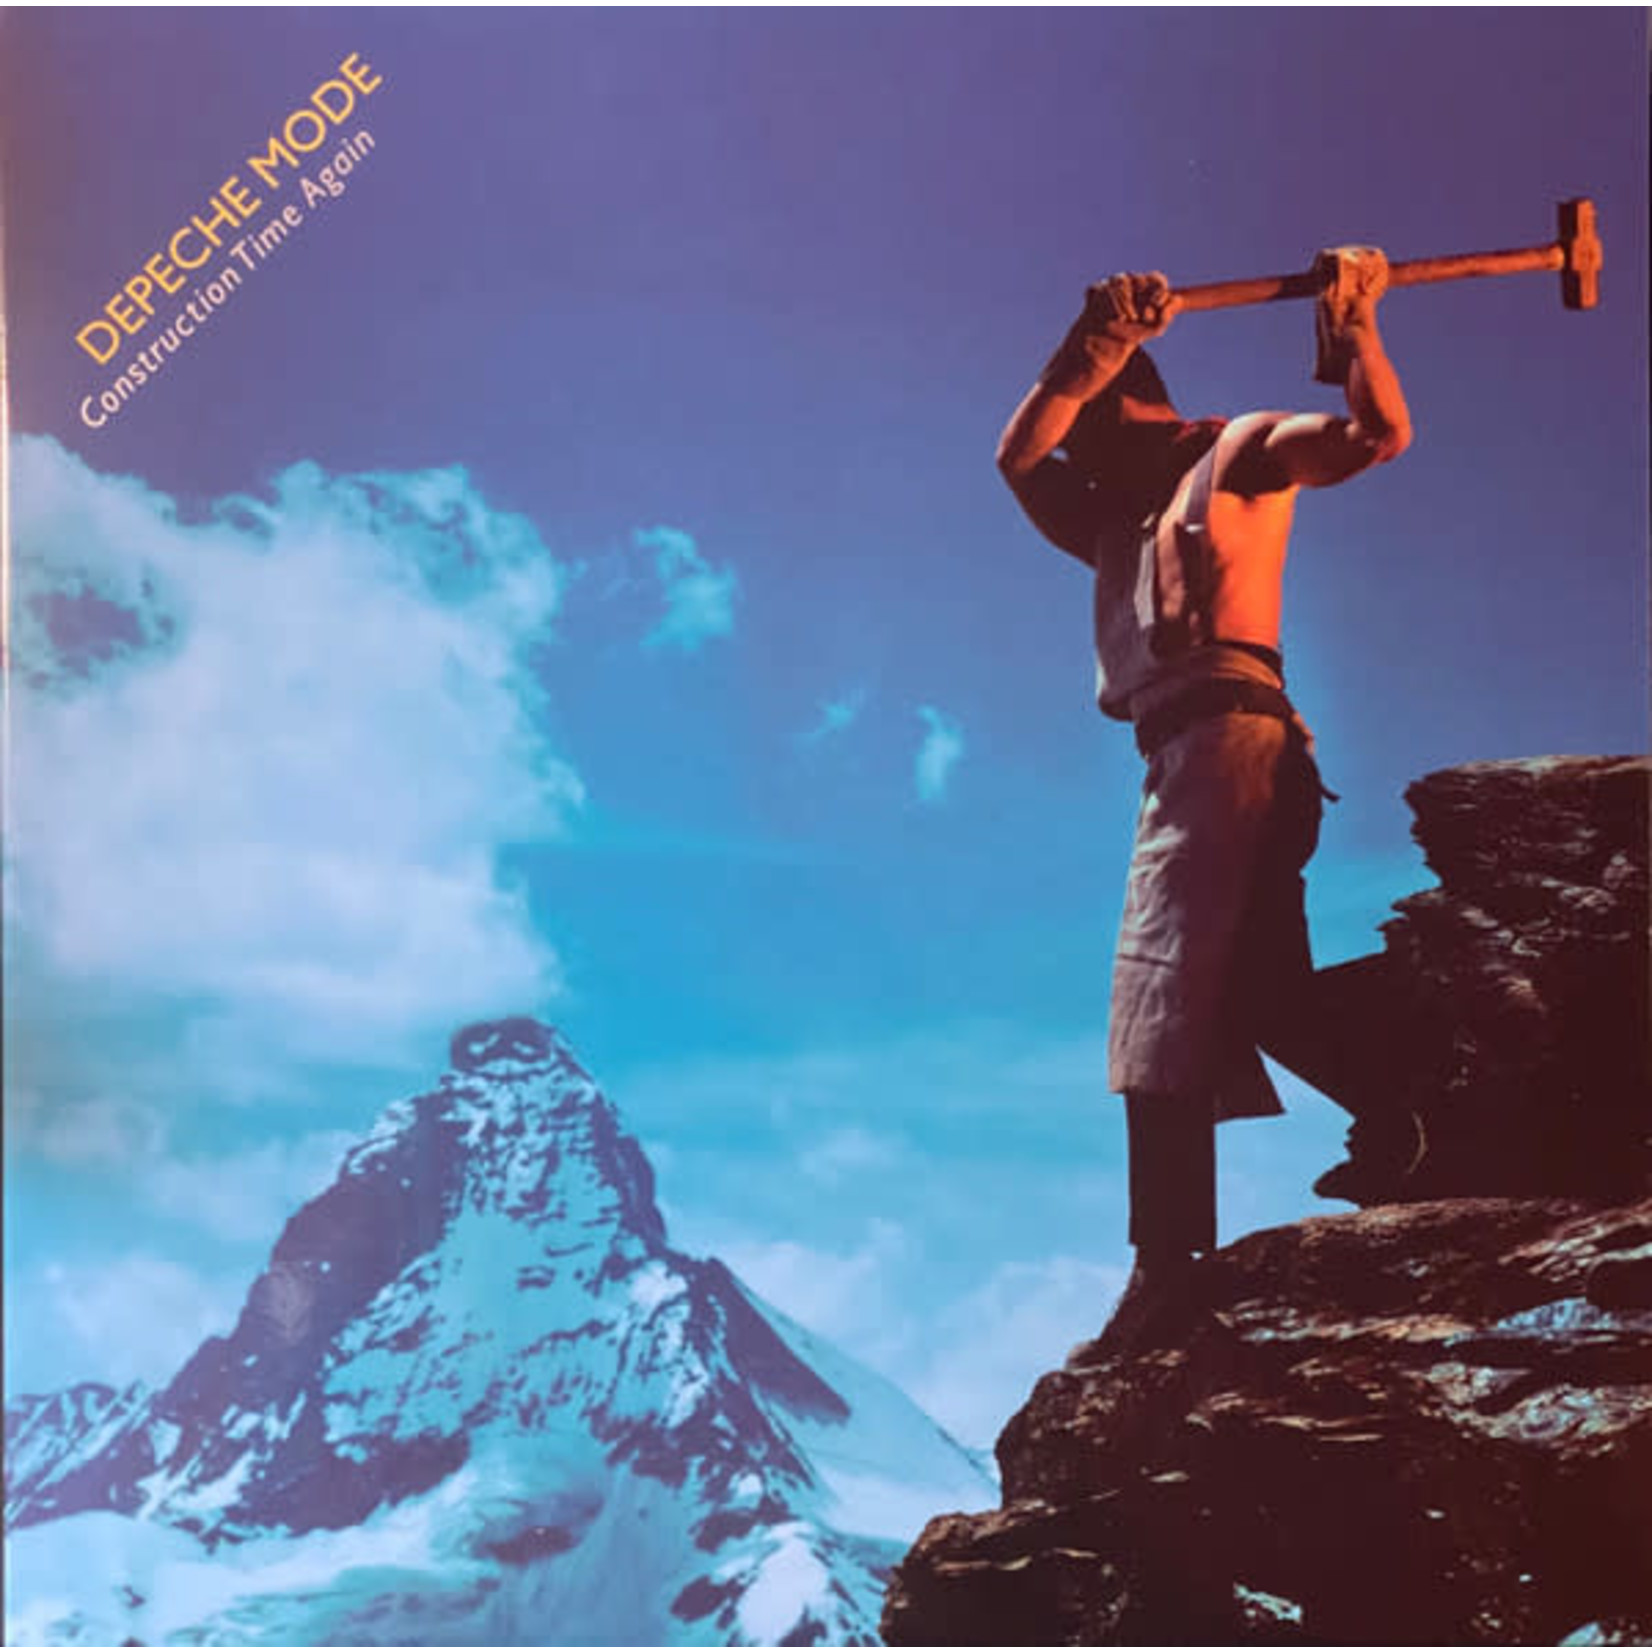 [New] Depeche Mode - Construction Time Again (euro version)